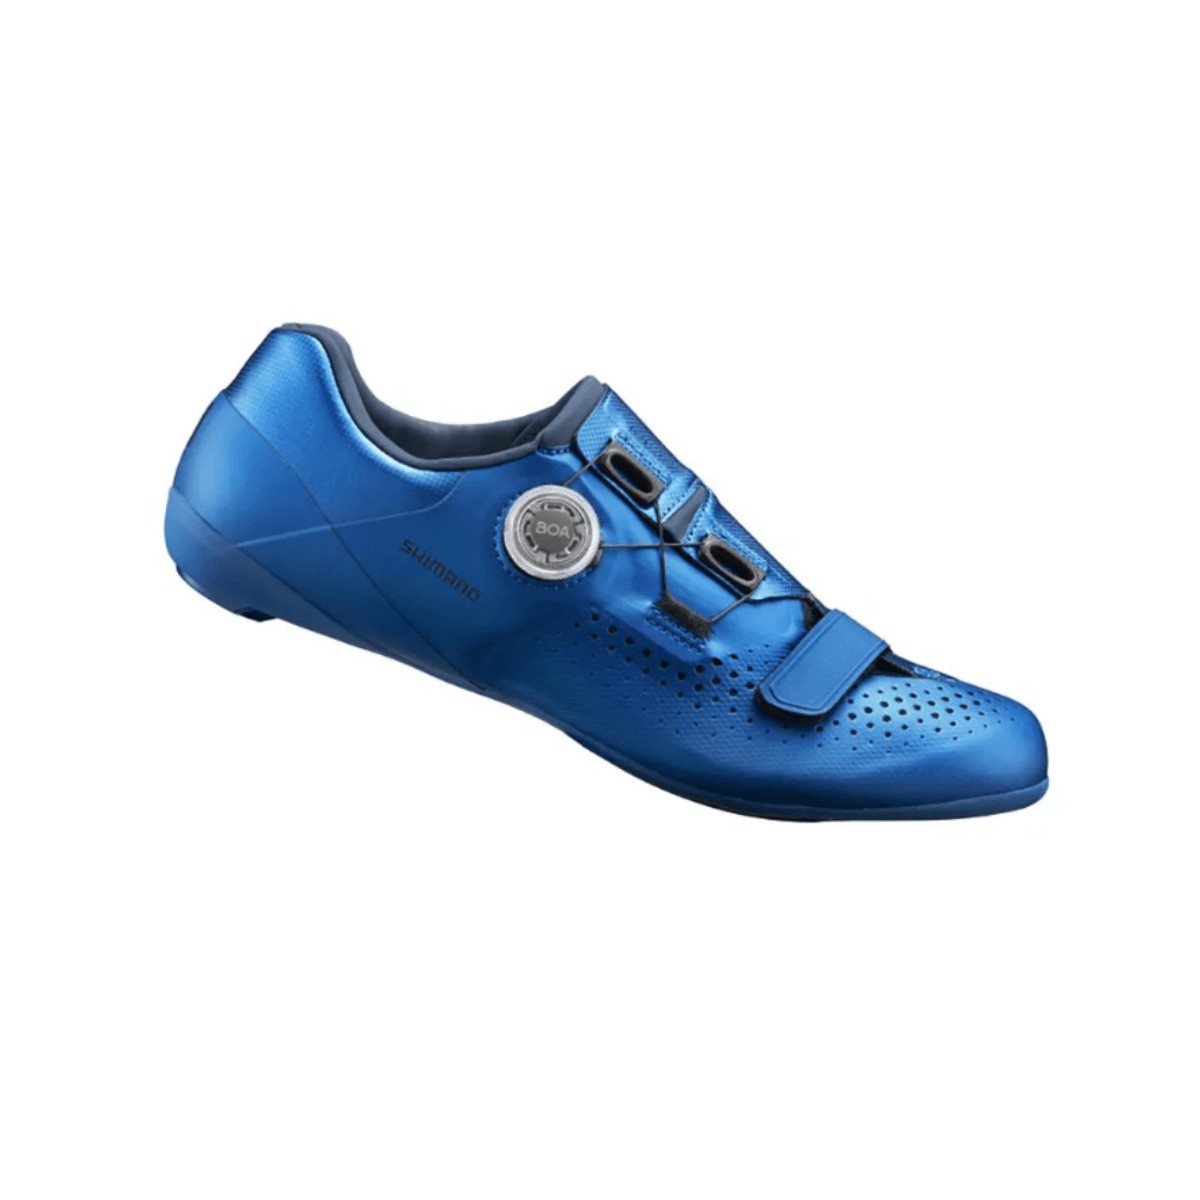 Shimano RC5 Road Blue Shoes, Size 41 - EUR